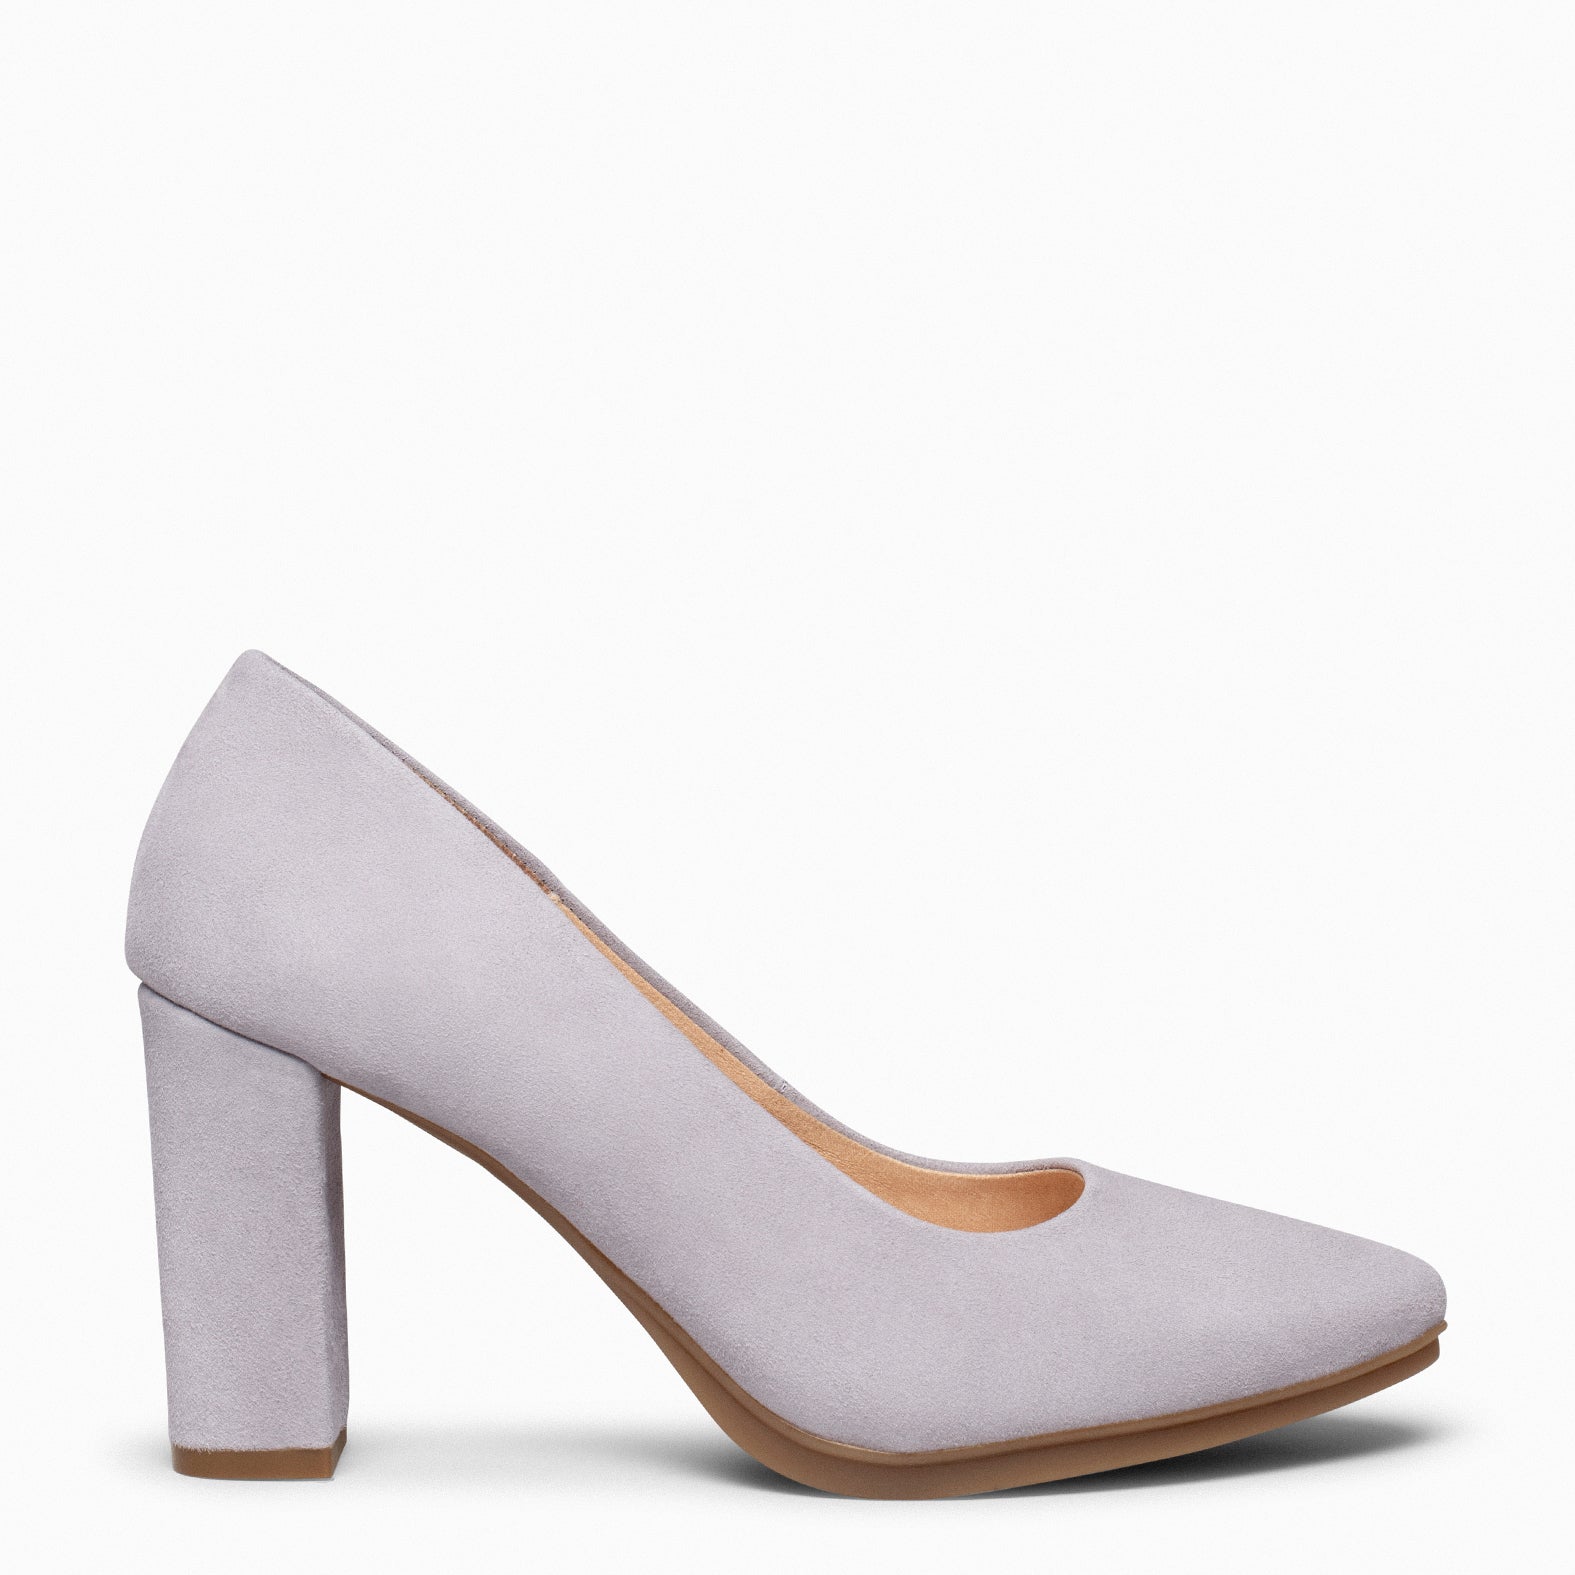 URBAN – GREY Suede high-heeled shoes 